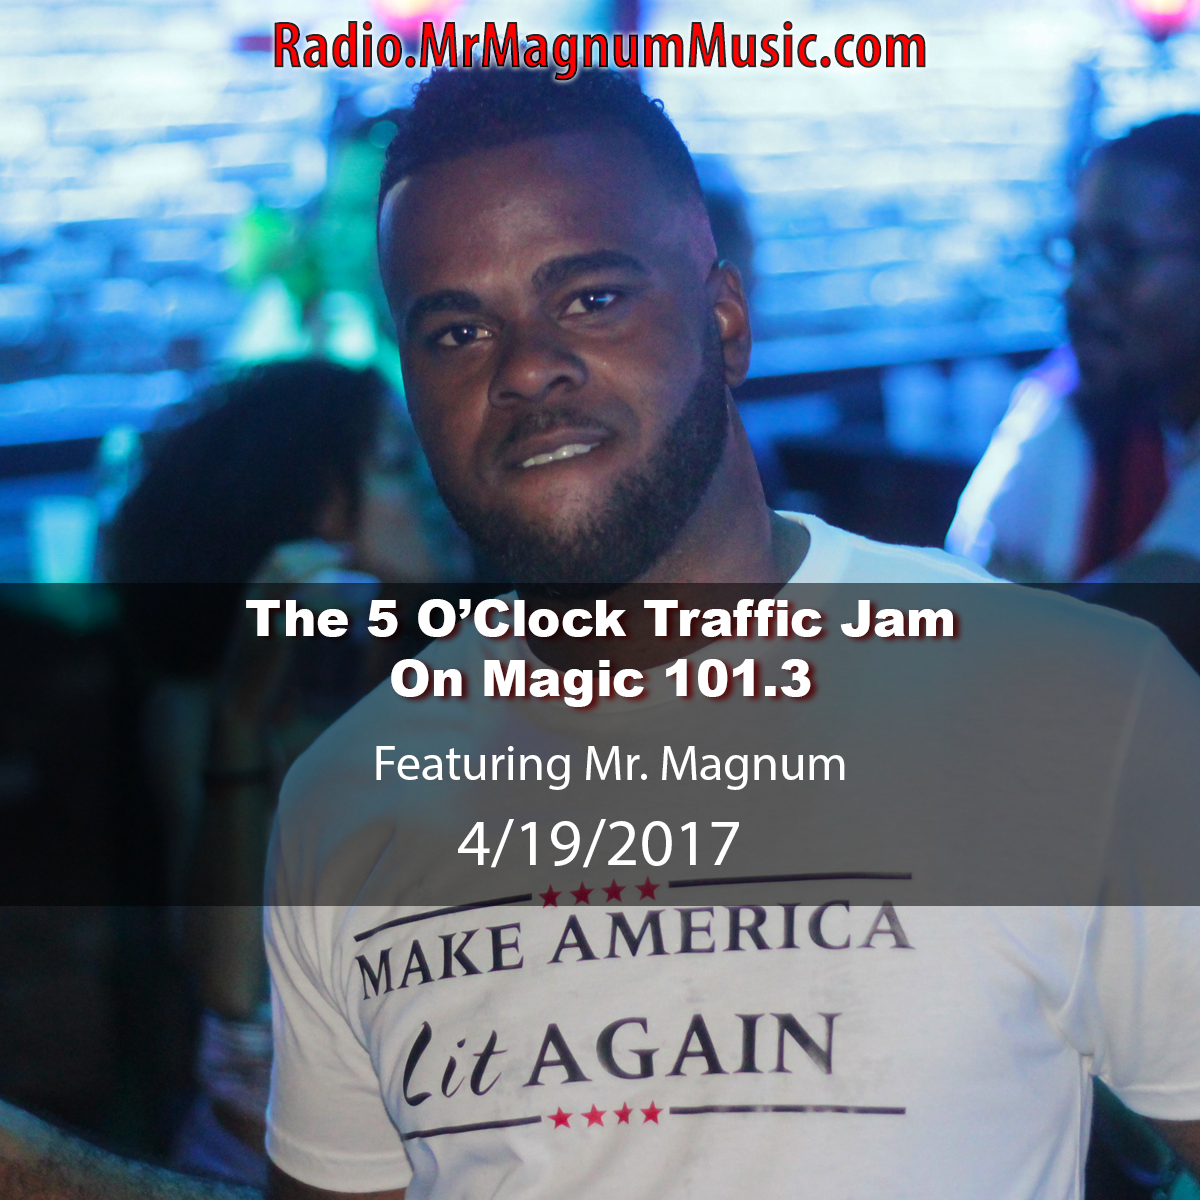 The 5 O'Clock Traffic Jam 20170419 featuring Gainesville's #1 DJ, Mr. Magnum on Magic 101.3